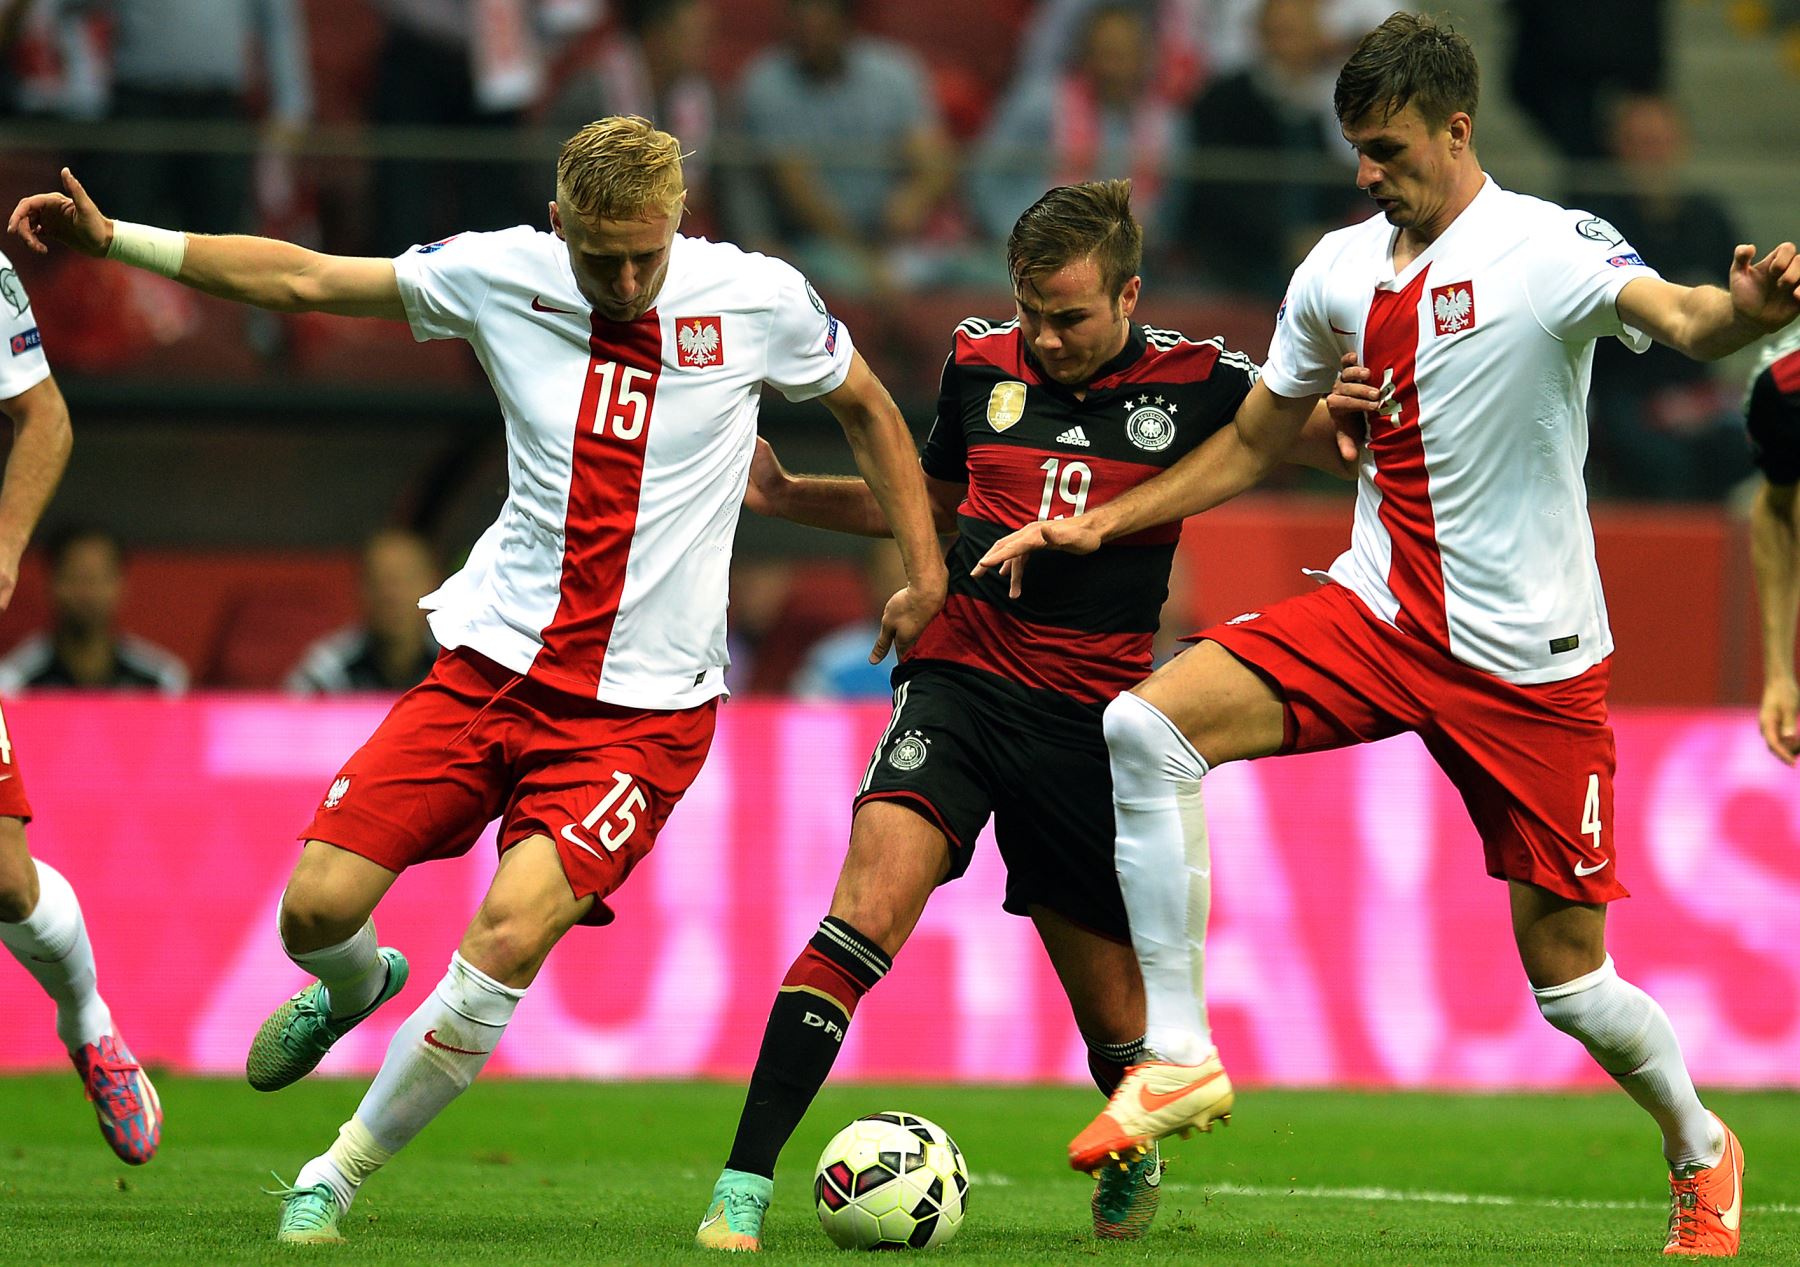 Alemania vs polonia futbol